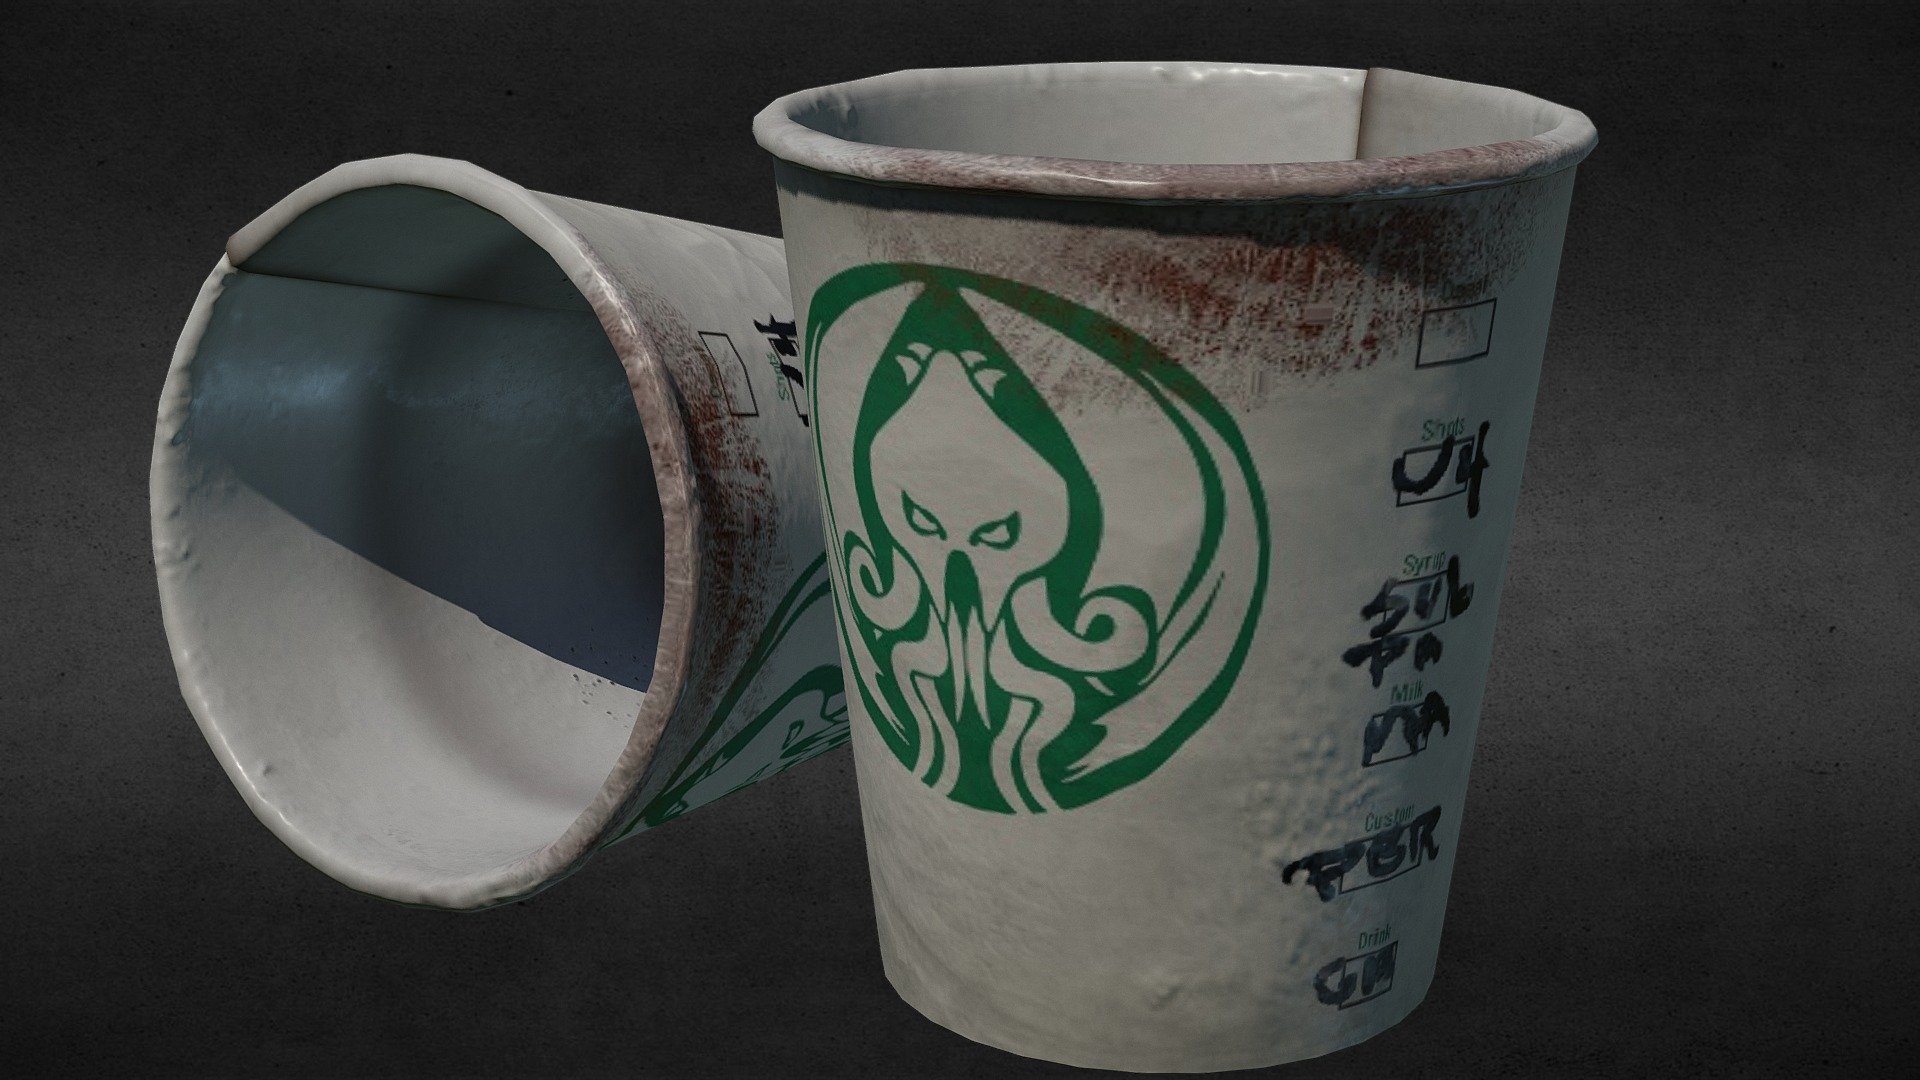 &lsquo;Cthulu Brand' coffee cups. &ldquo;It's Crazy Good.